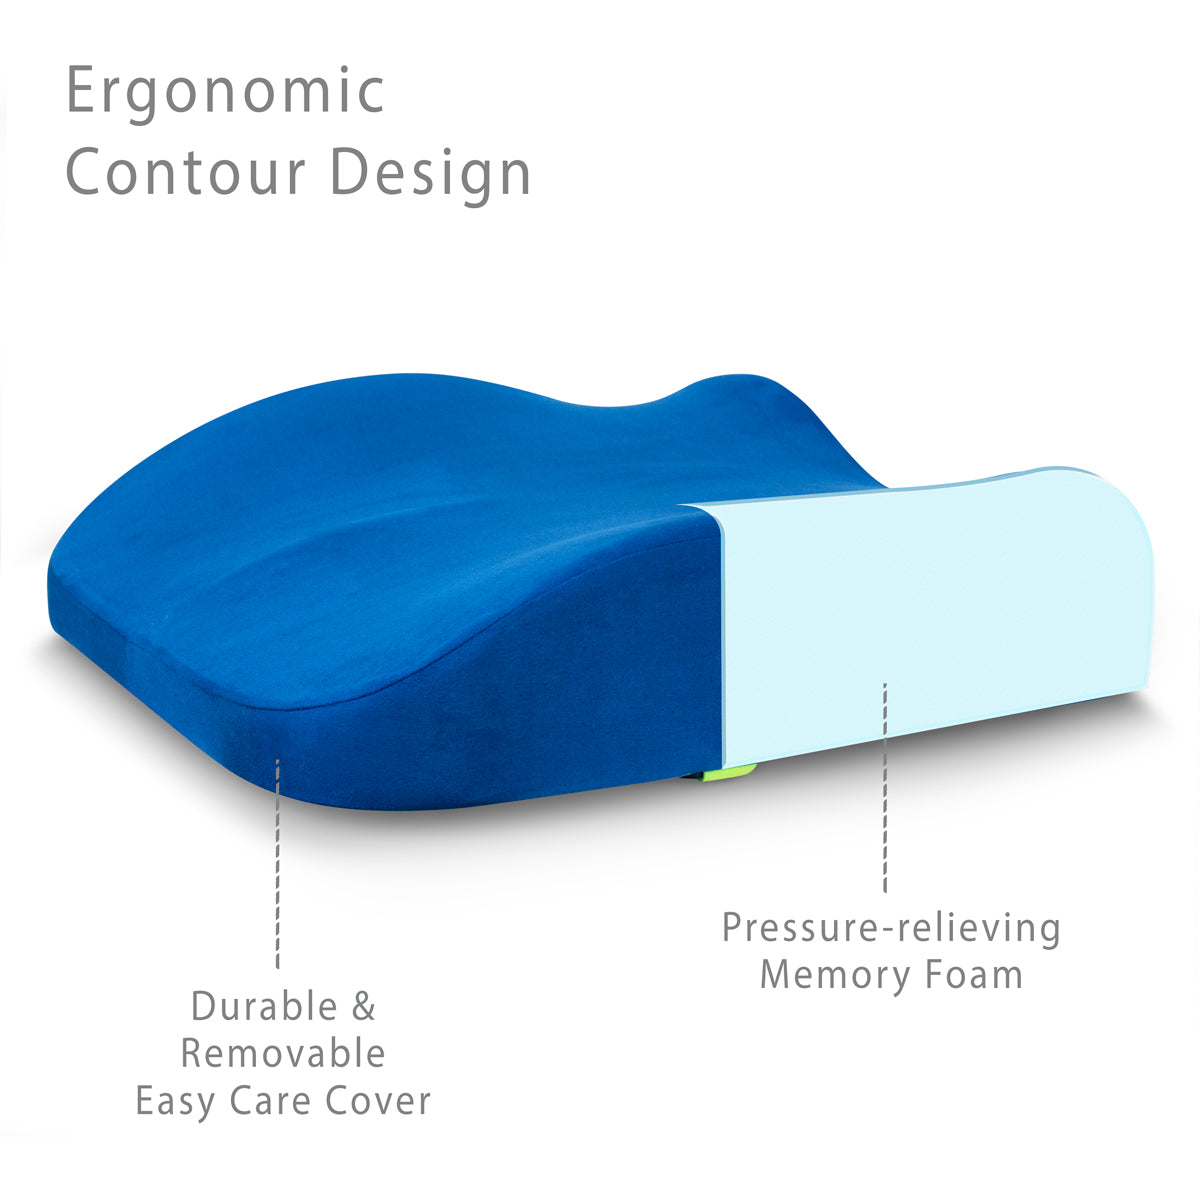 Sleep Yoga GO Oversize Seat Cushion & Lumbar Support